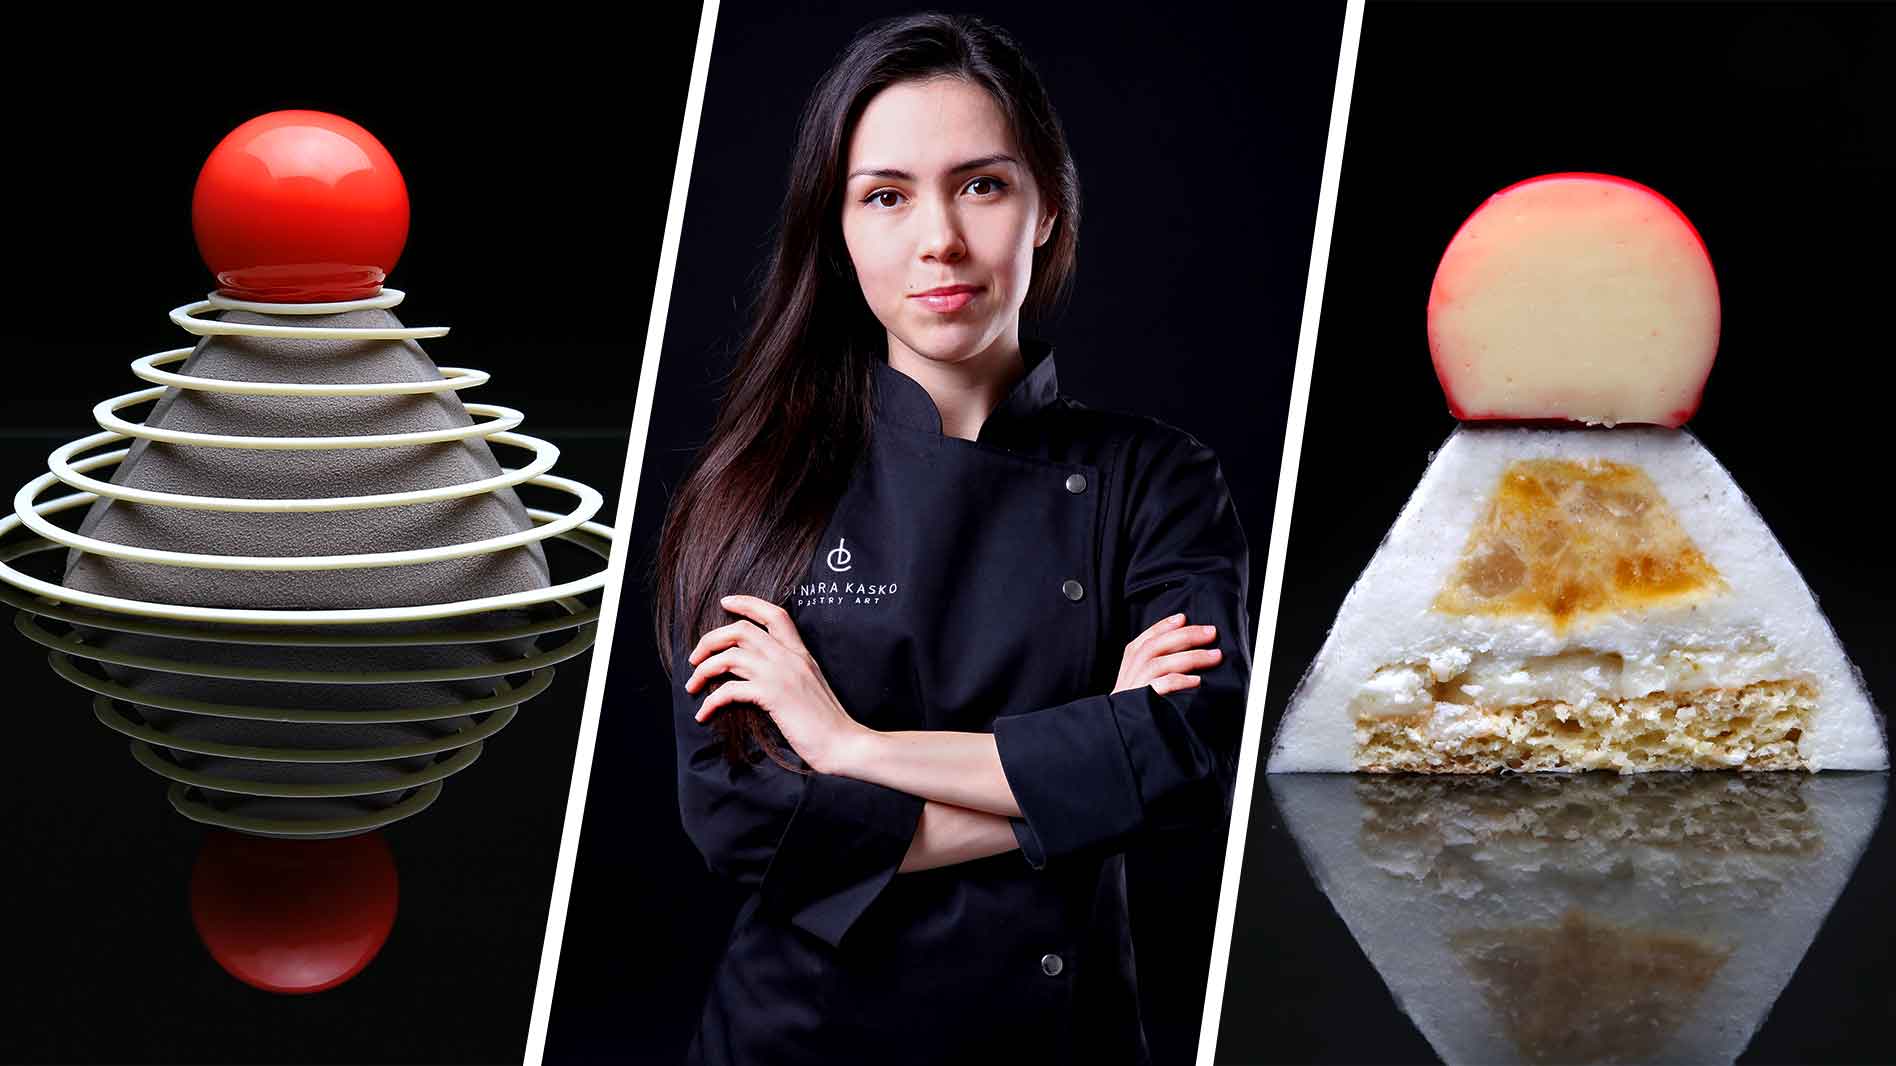 International chef reveals her tricks to mastering a dessert using a 3D printer